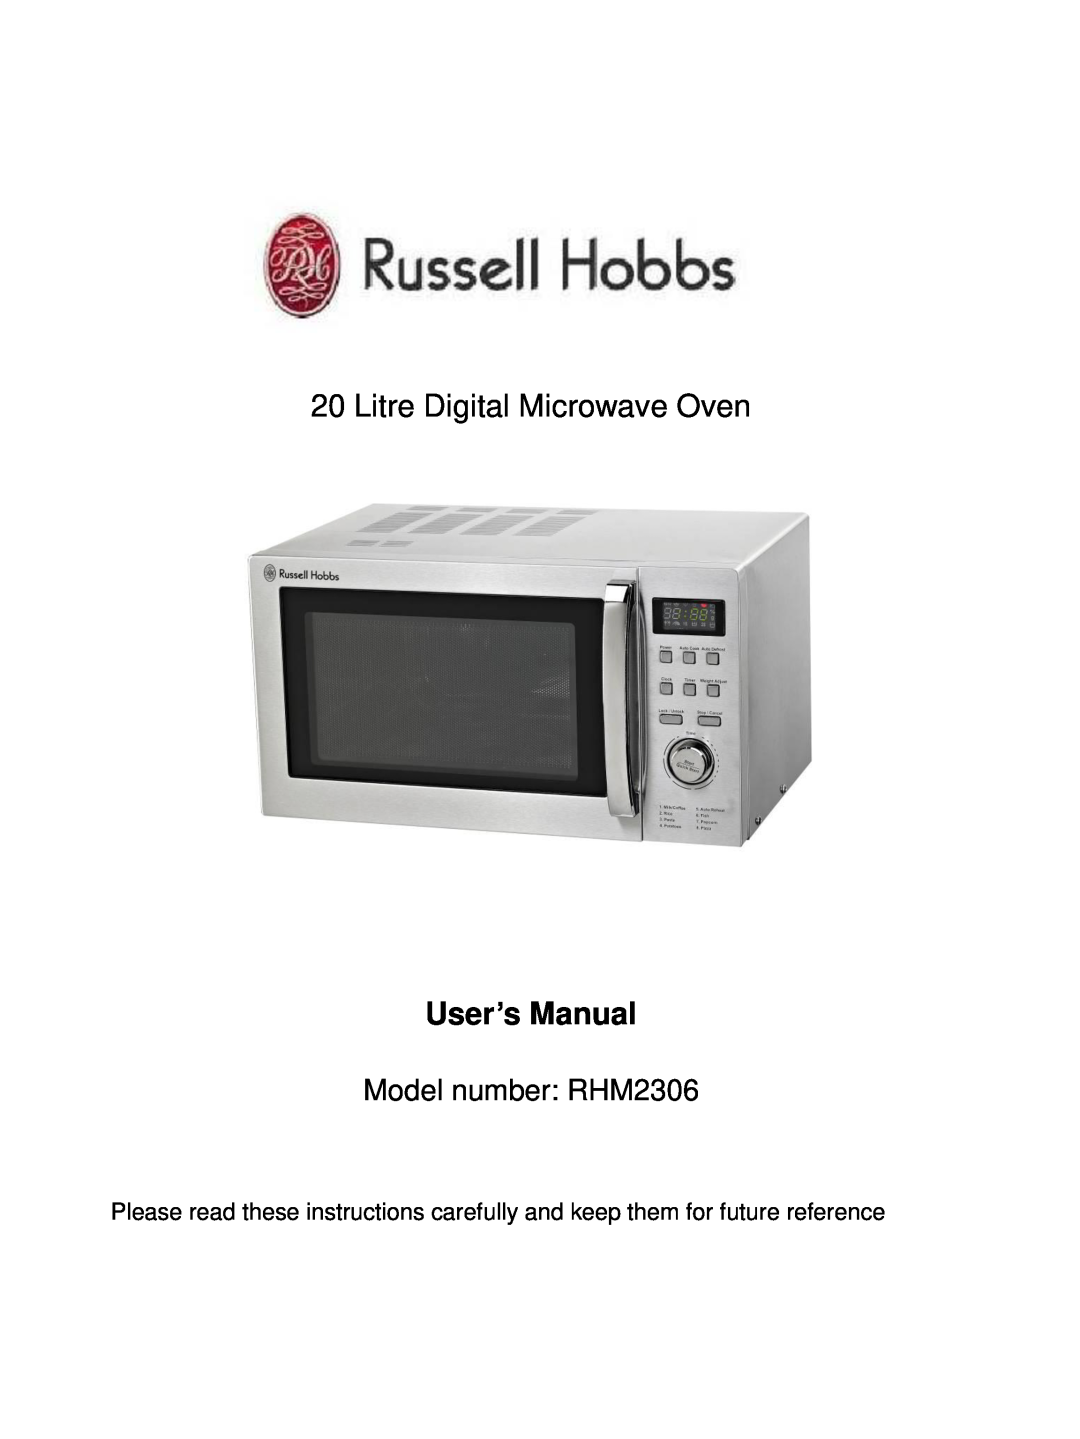 Russell Hobbs user manual Litre Digital Microwave Oven, Model number RHM2306 